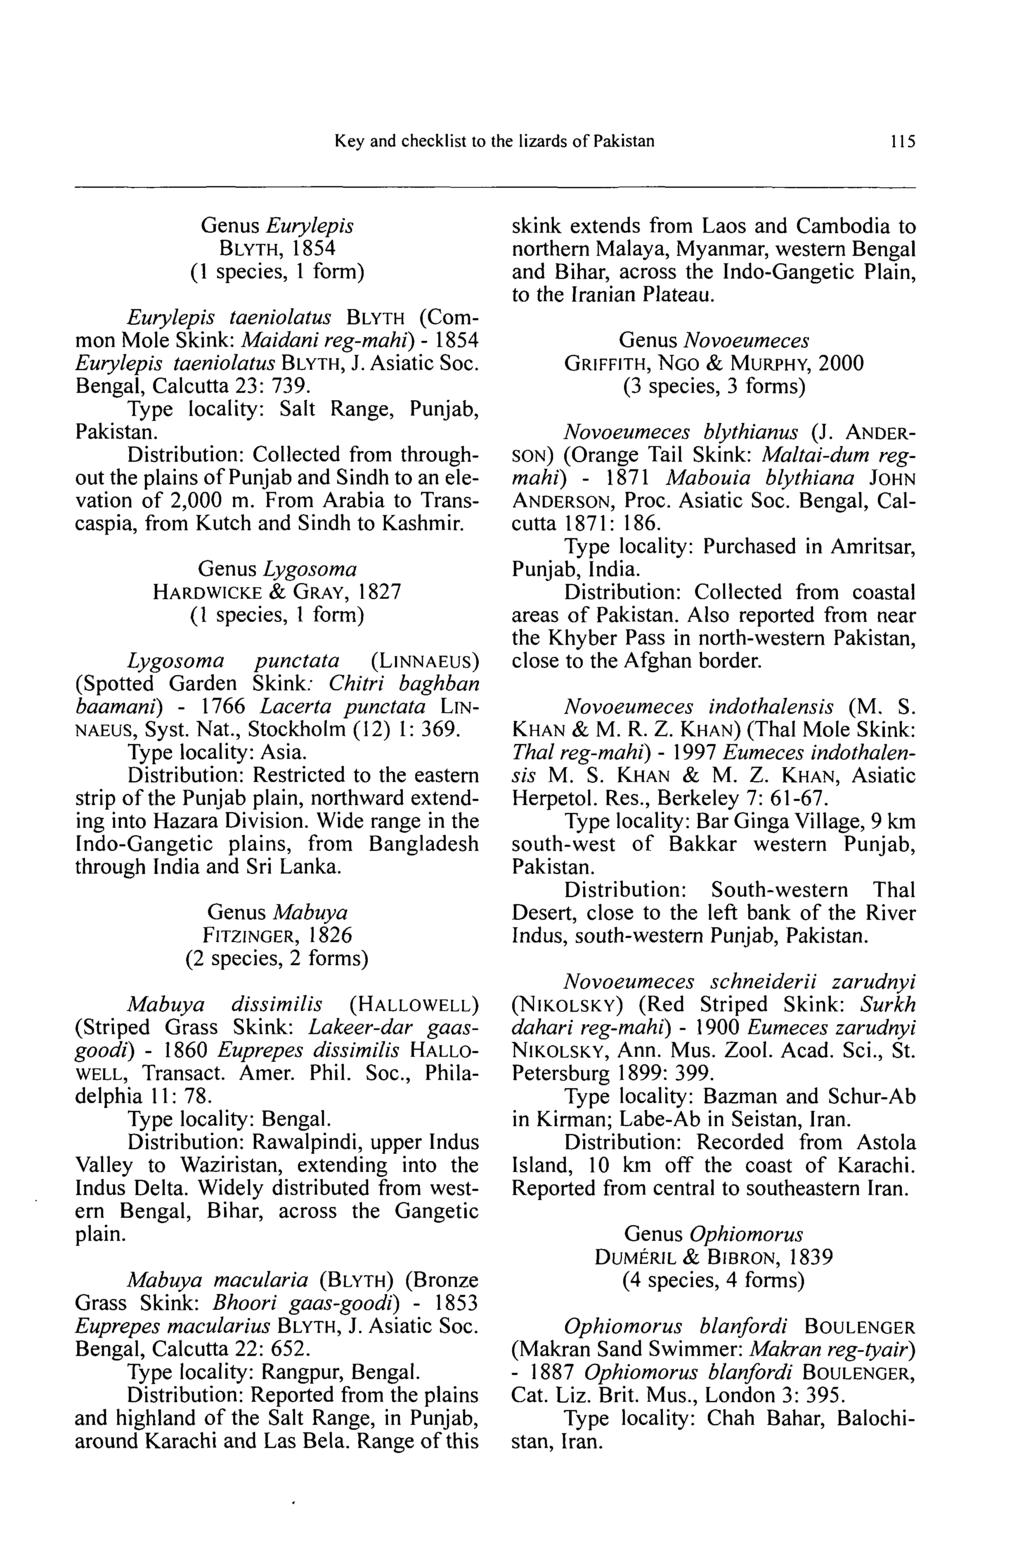 Key and checklist to the lizards of Pakistan 115 Genus Eurylepis BLYTH, 1854 (1 species, 1 form) Eurylepis taeniolatus BLYTH (Common Mole Skink: Maidani reg-mahi) - 1854 Eurylepis taeniolatus BLYTH,